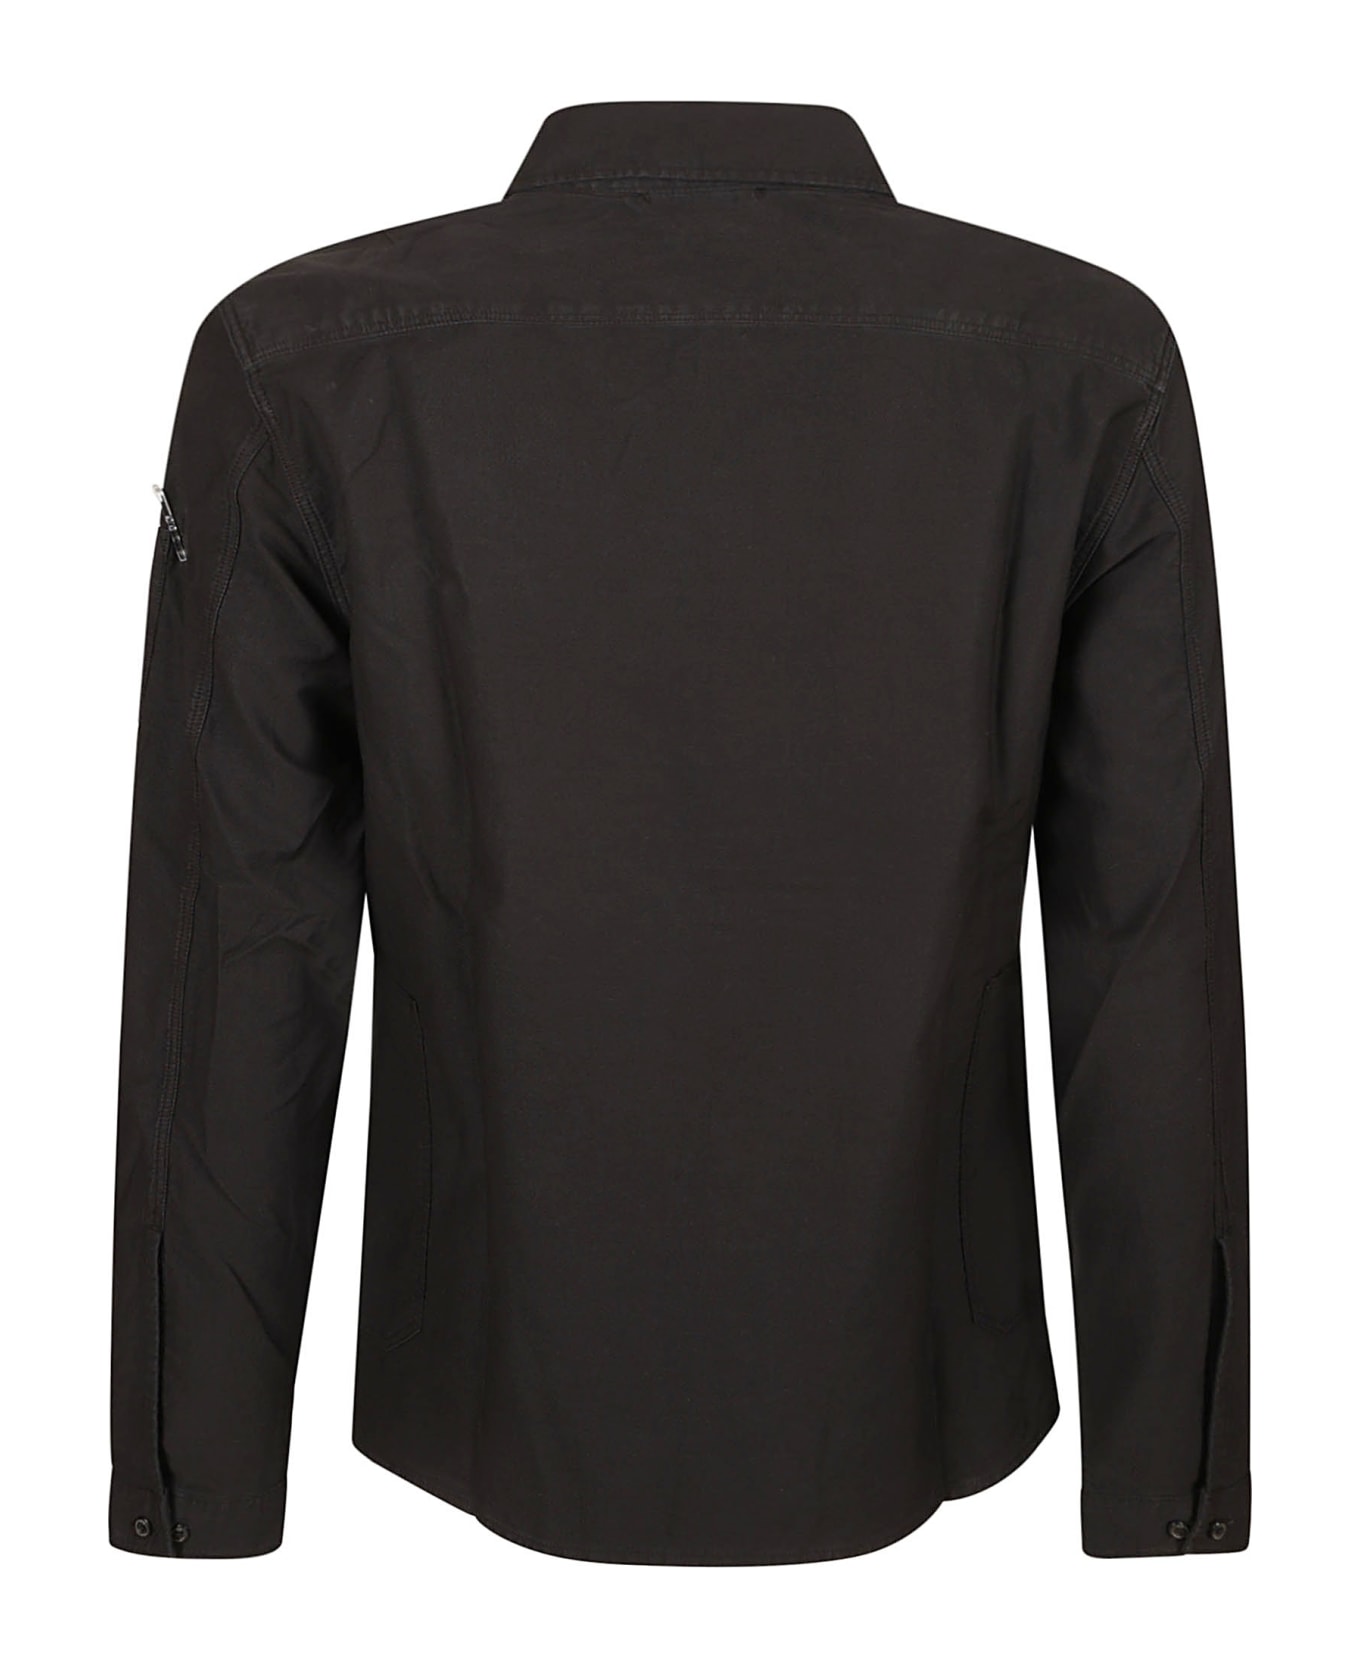 C.P. Company Ottoman Long-sleeved Shirt - Black